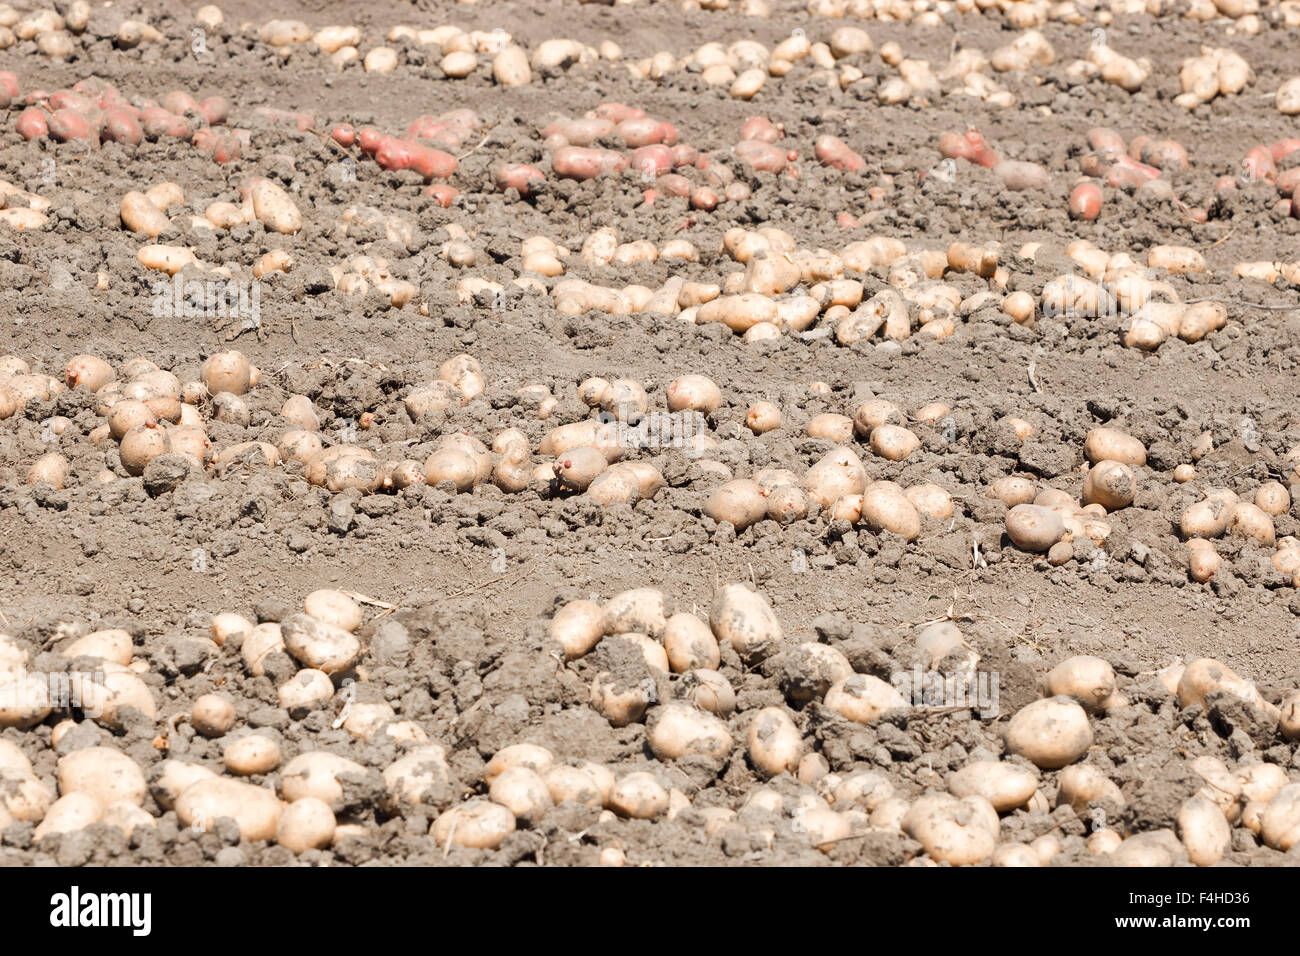 Potato production Stock Photo